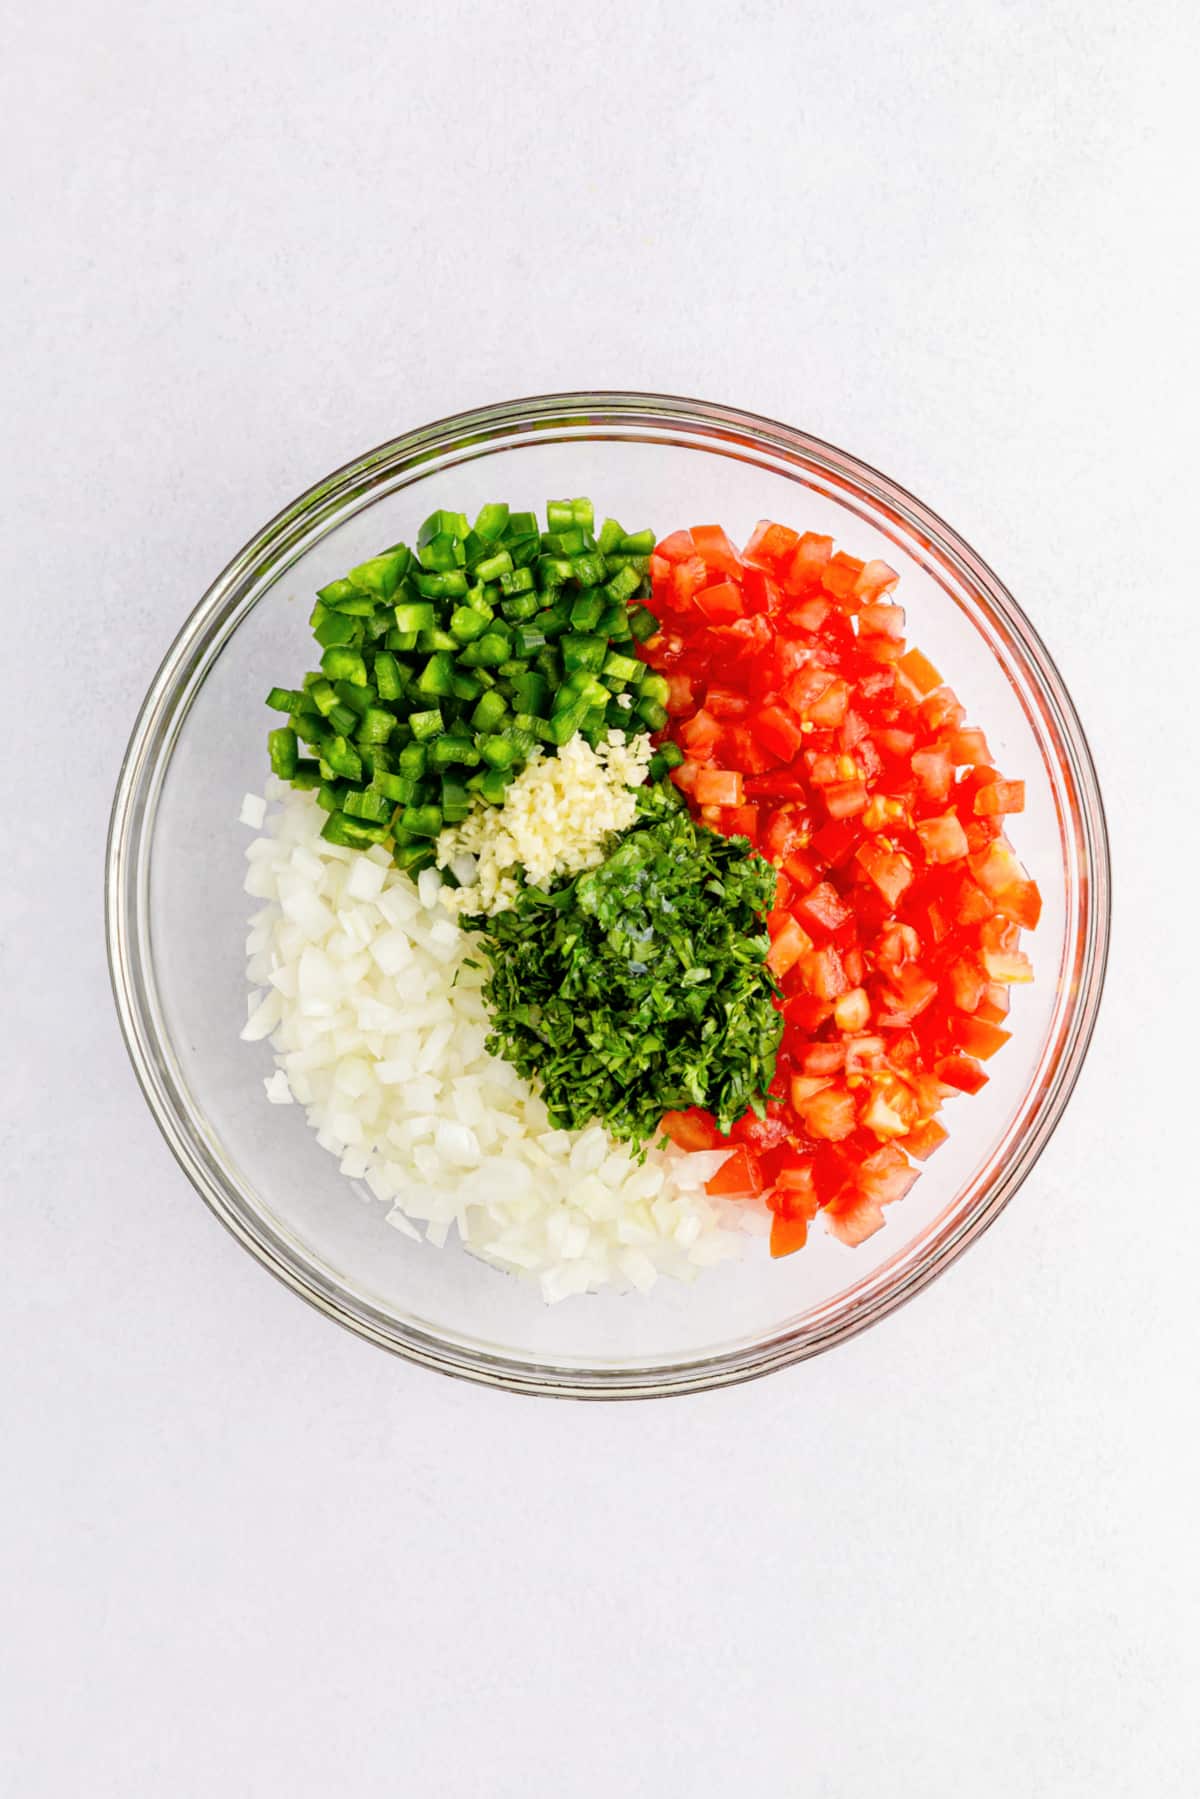 diced veggies in large bowl